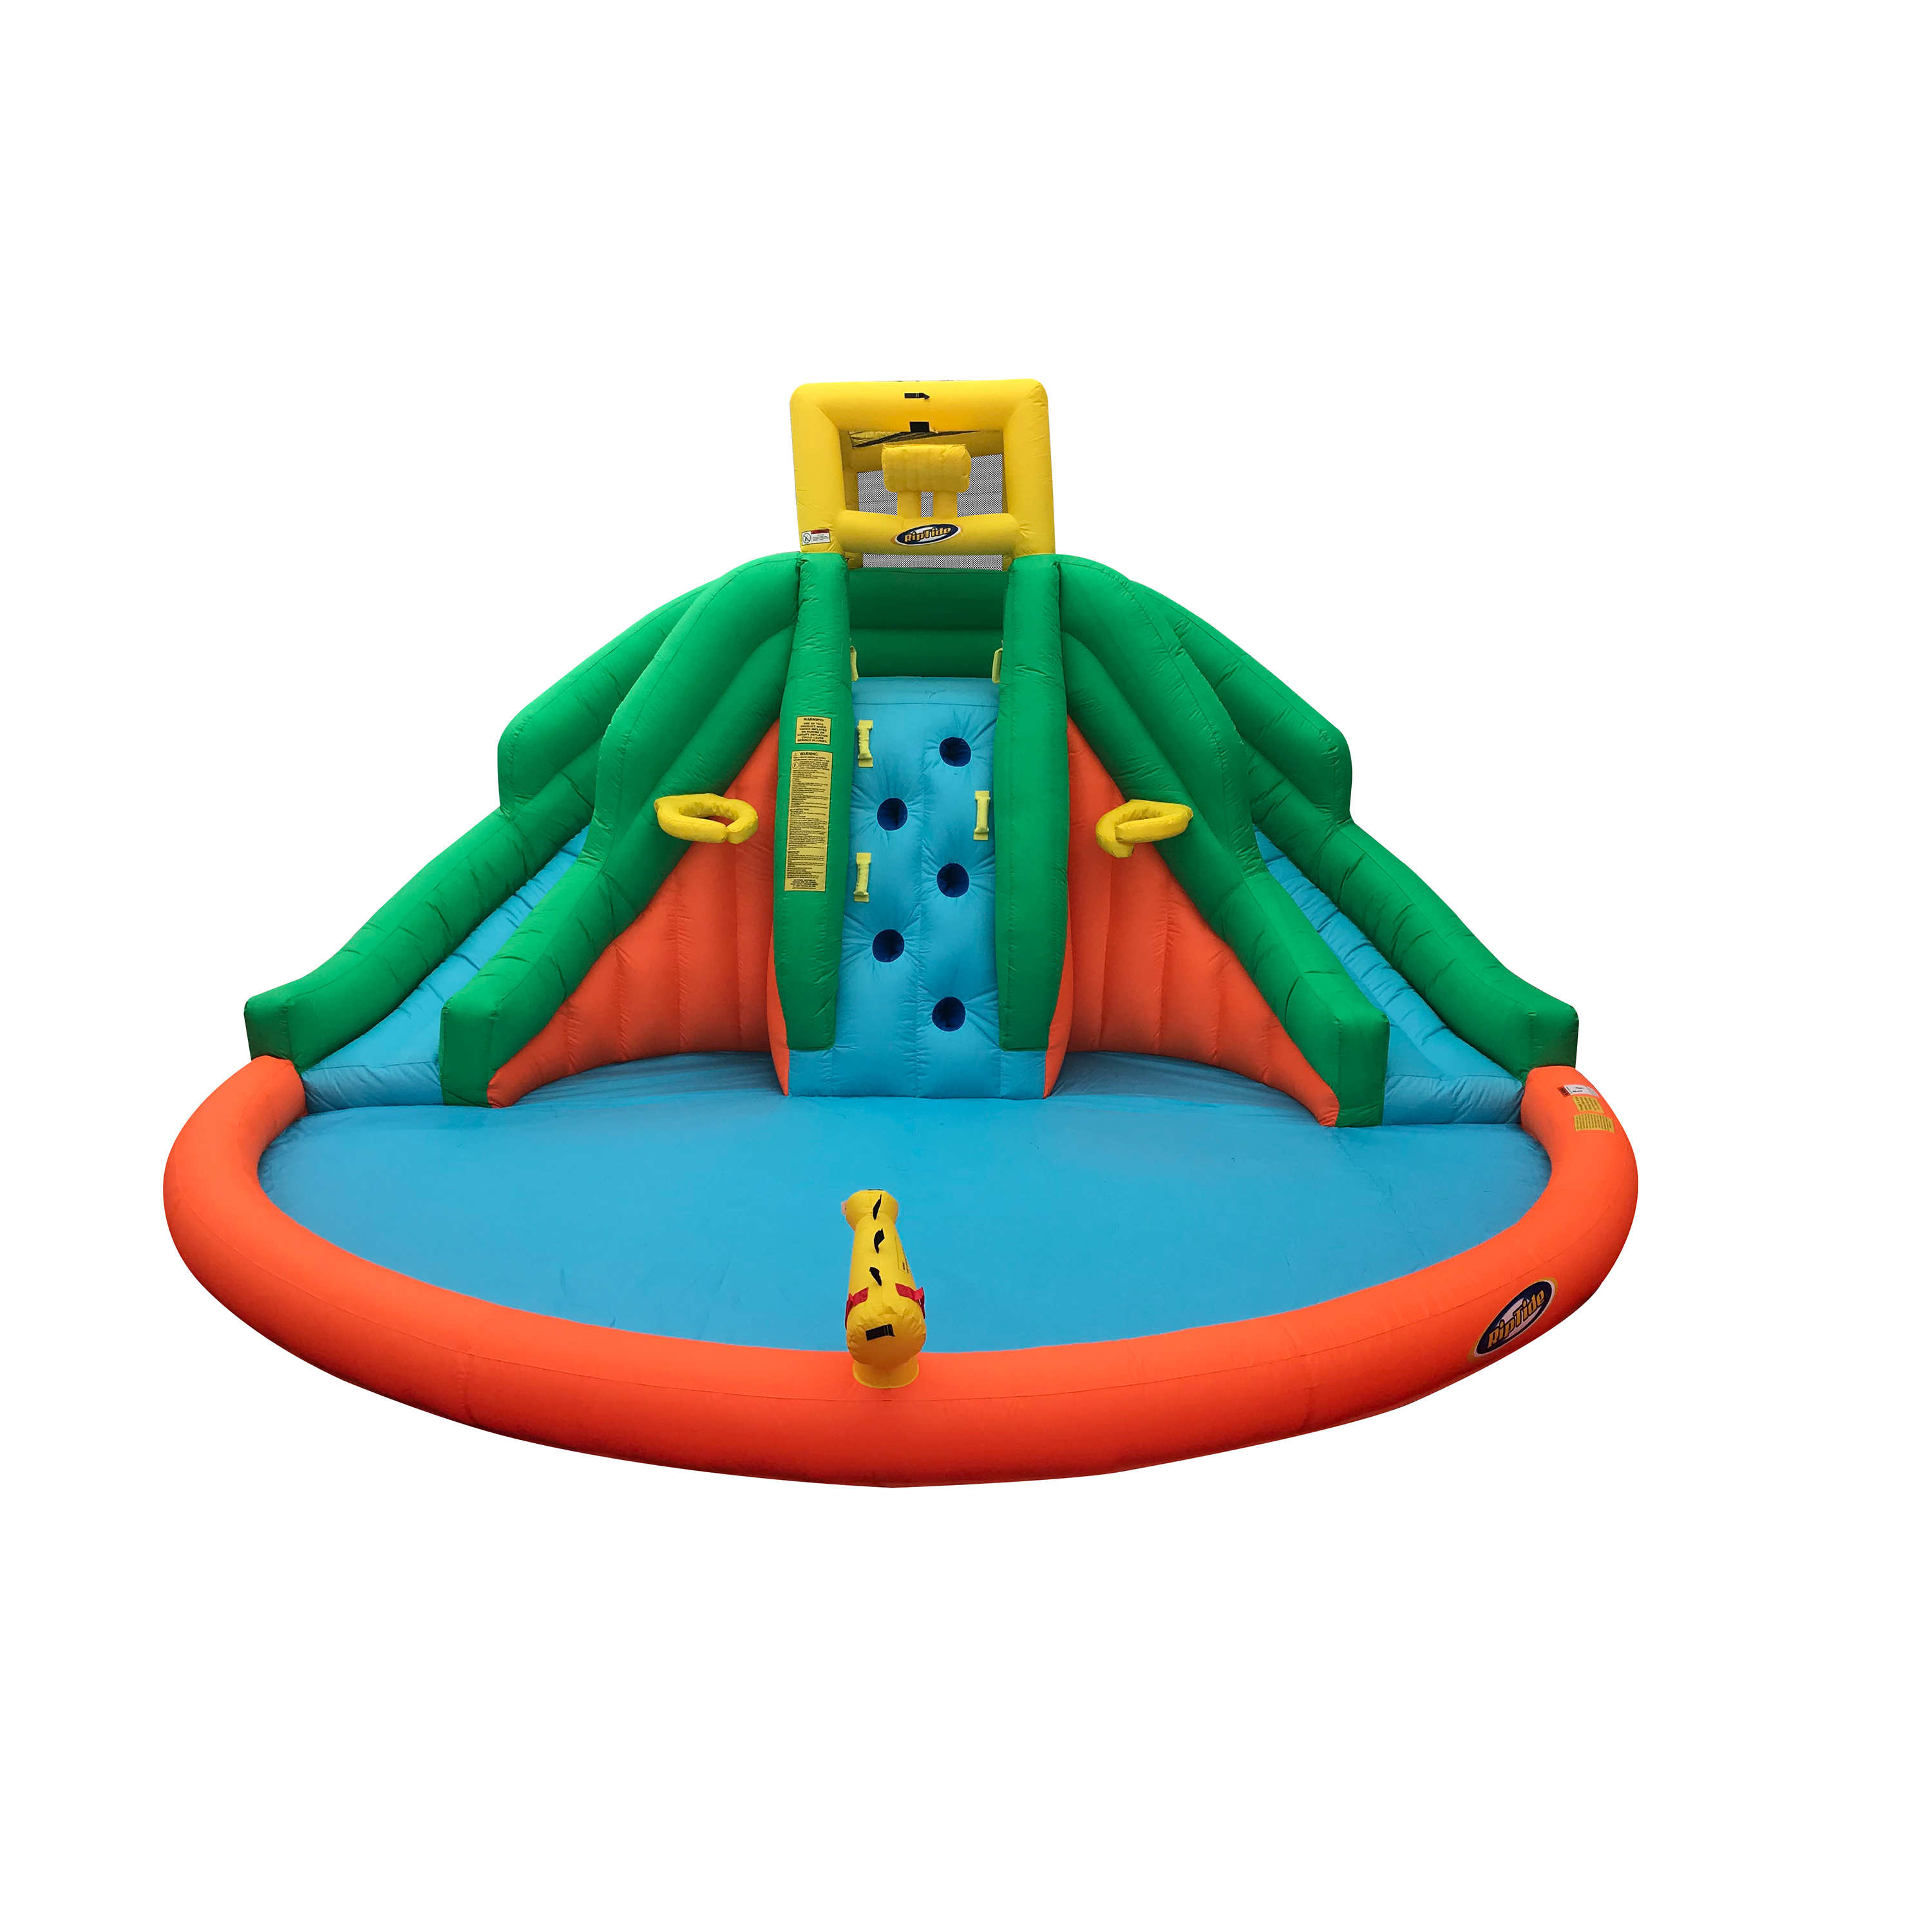 Kahuna 90475 Twin Peaks Kids Inflatable Splash Pool Backyard Water Slide Park - image 1 of 6